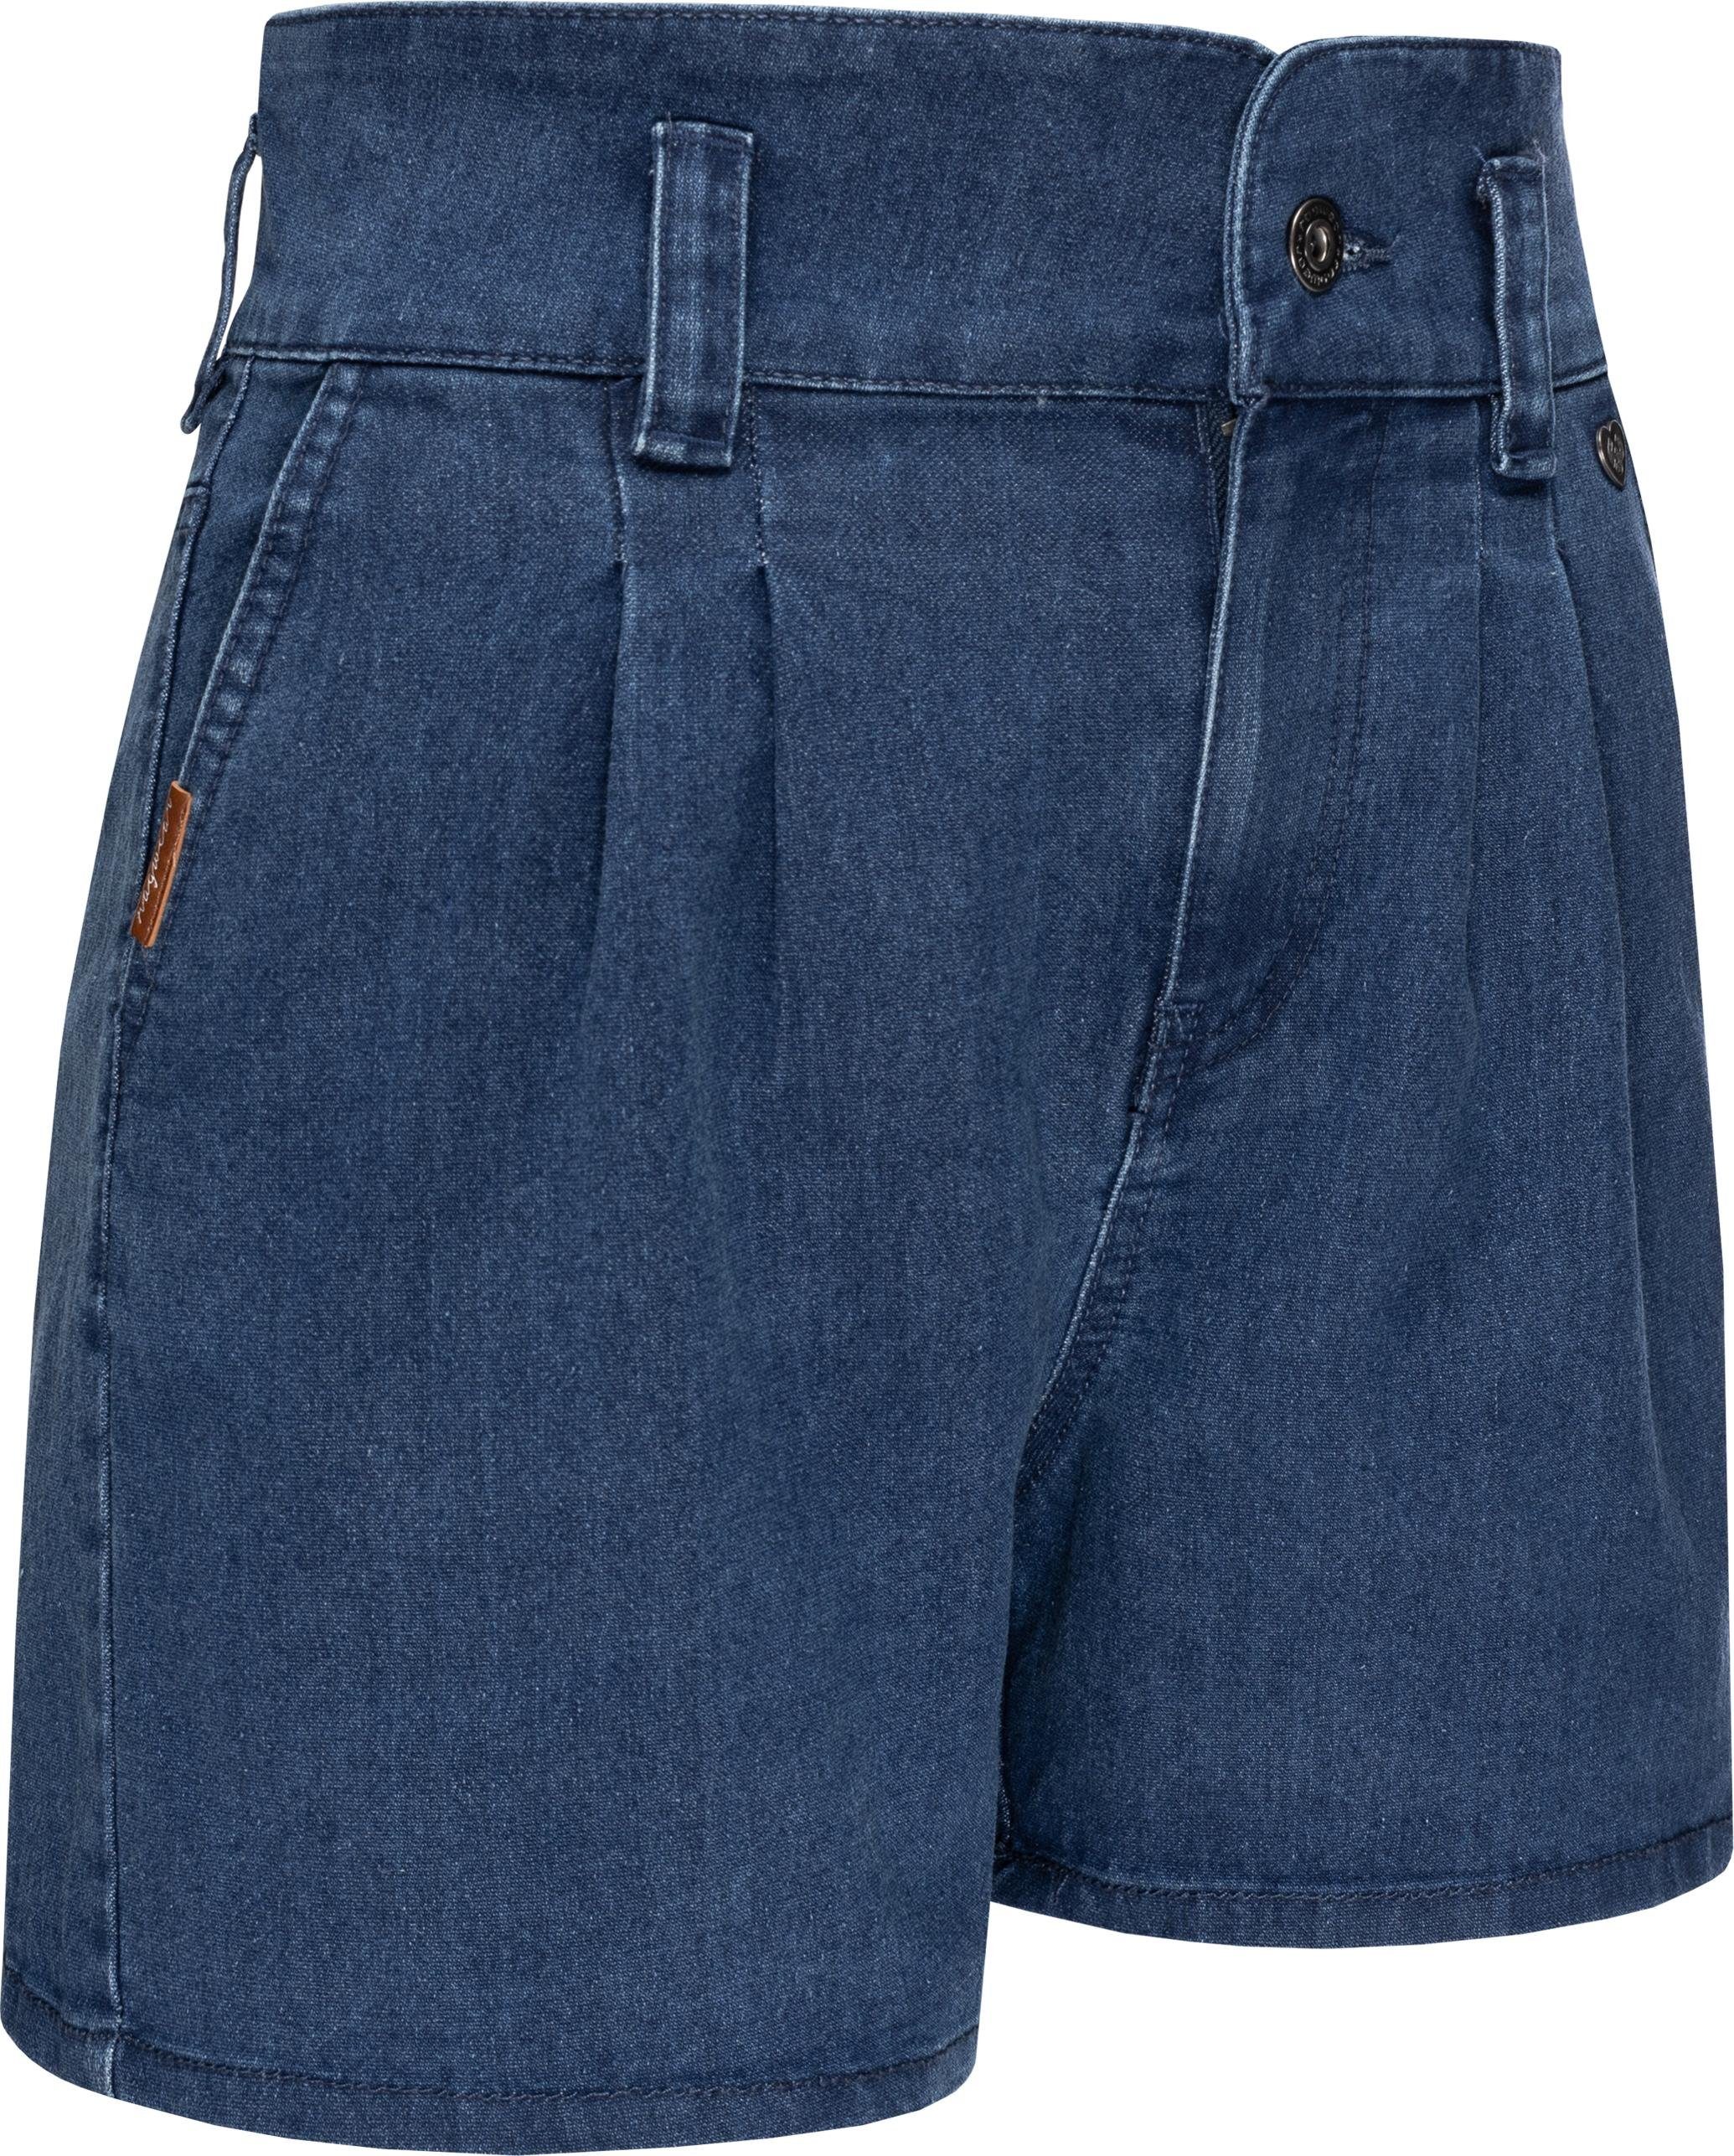 Ragwear Shorts Suzzie stylische, in Jeansoptik kurze indigo Sommerhose